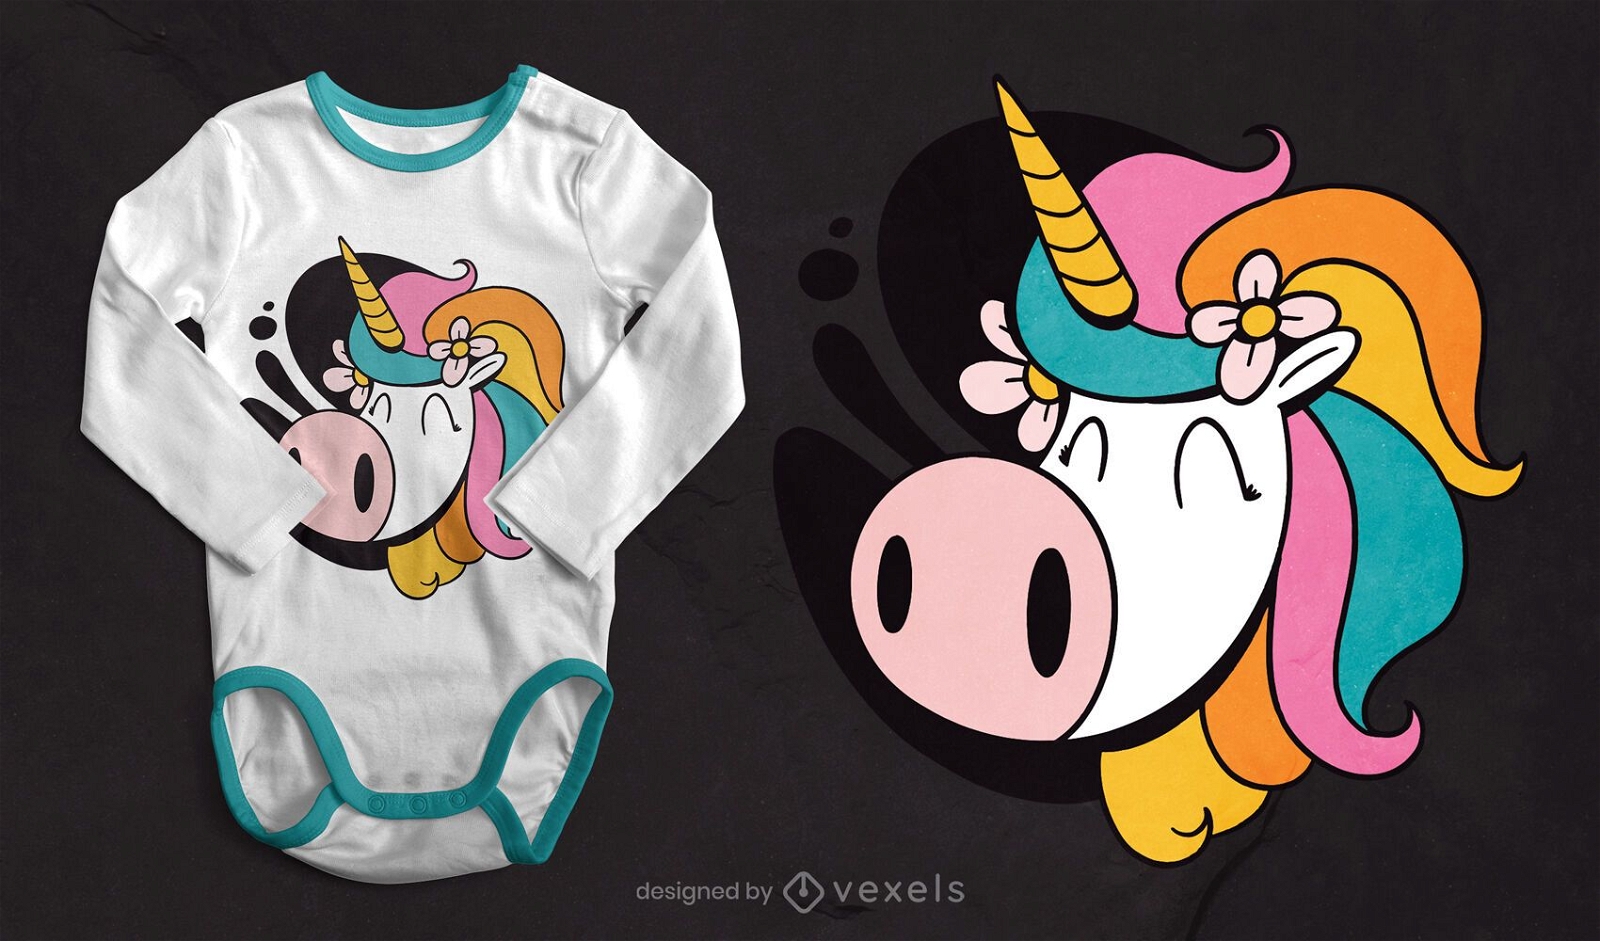 Cute unicorn face t-shirt design